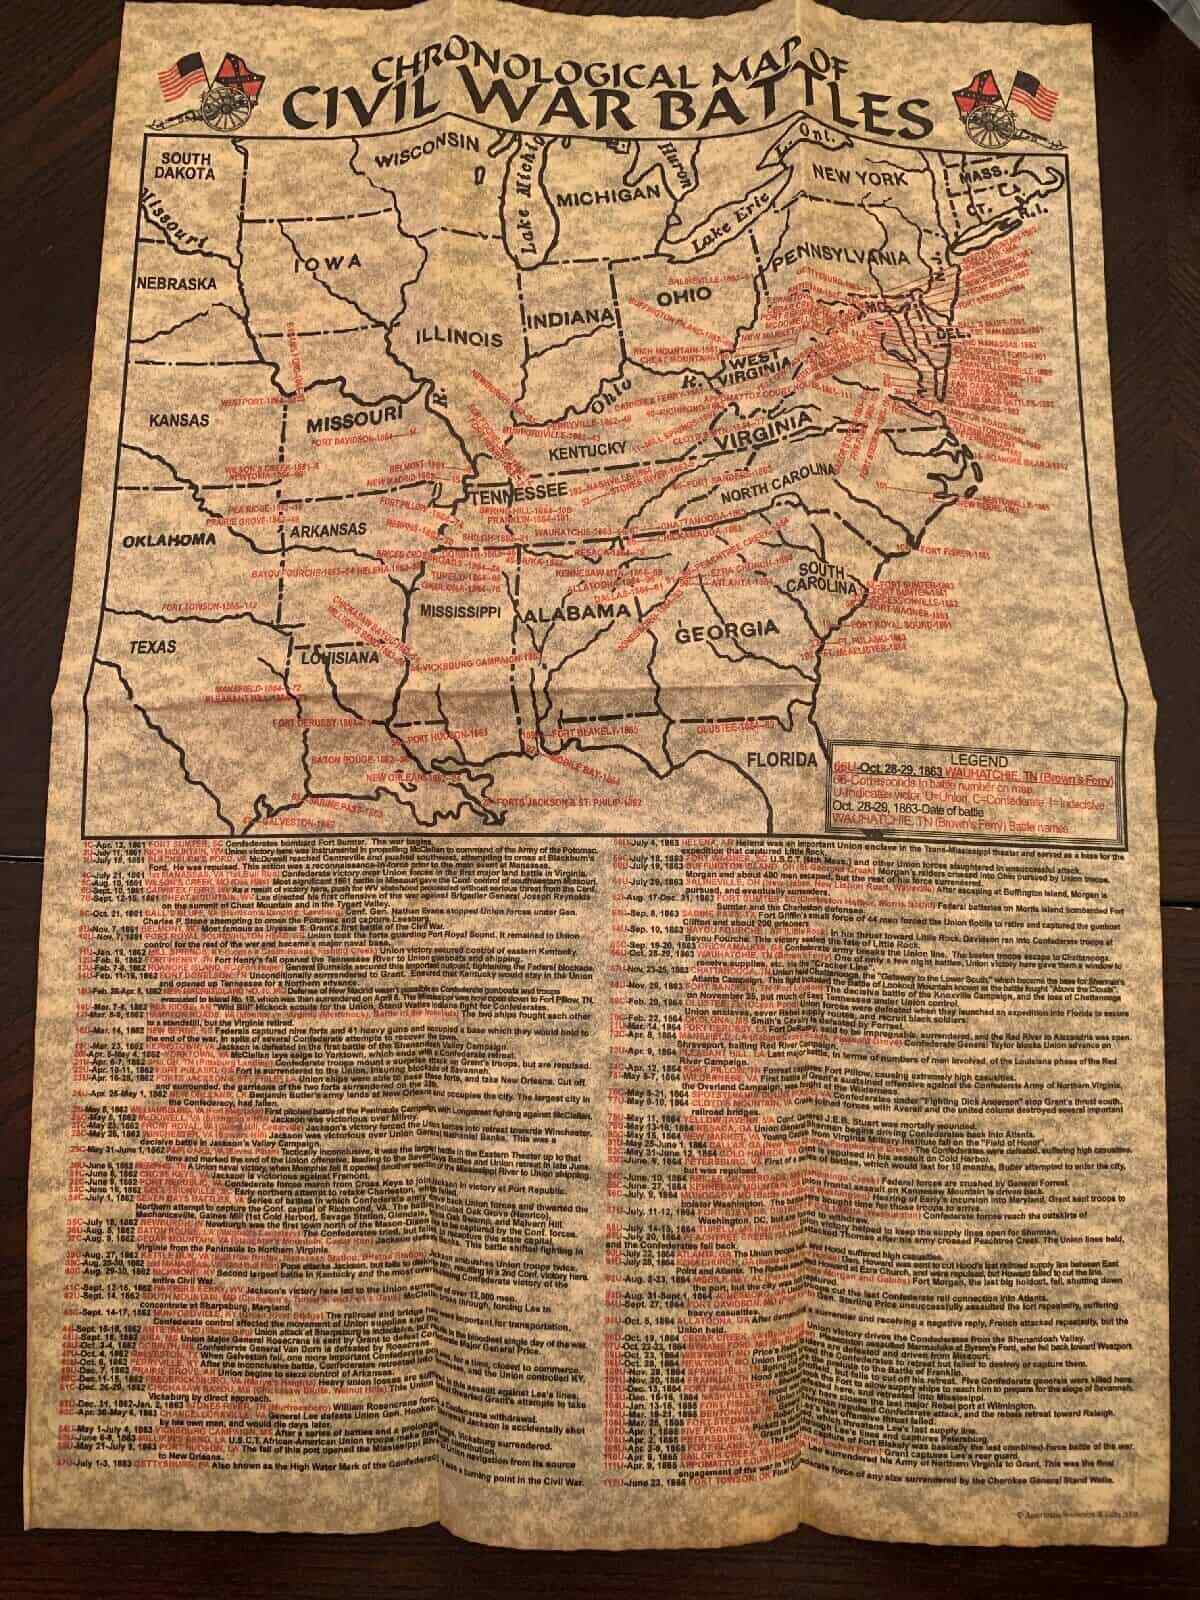 Chronological Map of Civil War Battles